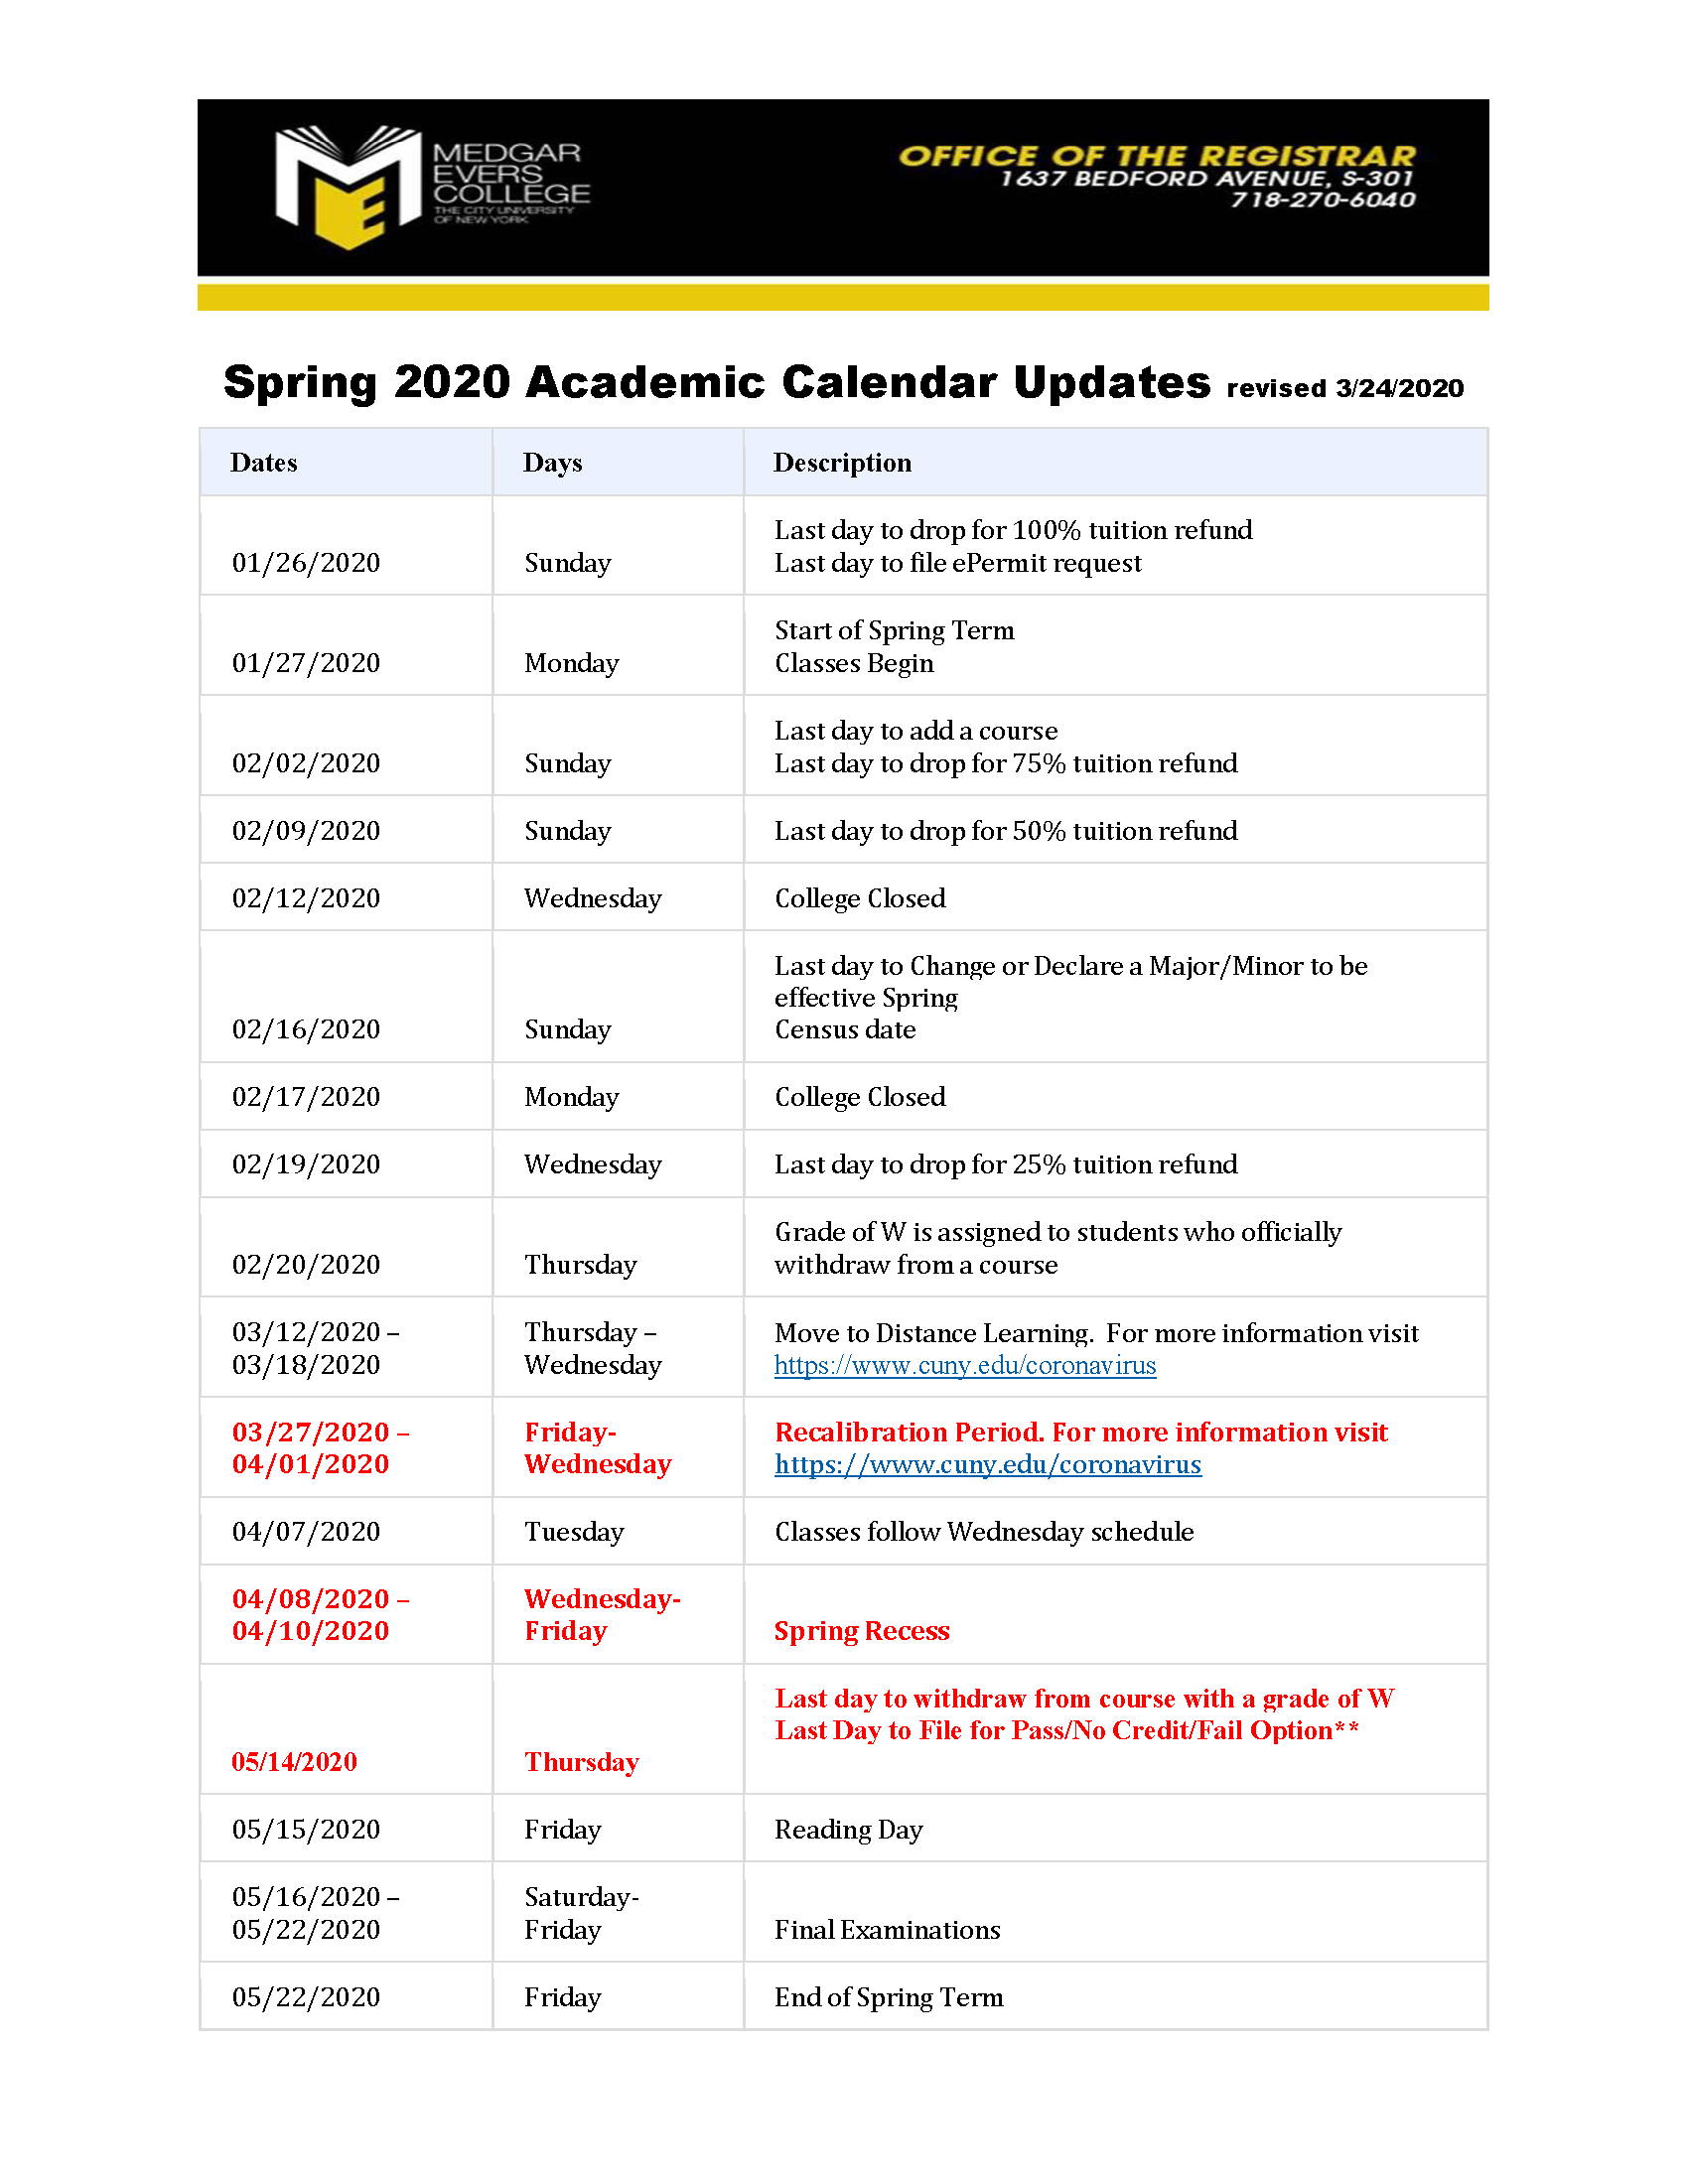 March 26 Spring 2020 Academic Calendar Updates | MEC COVID-19 Response